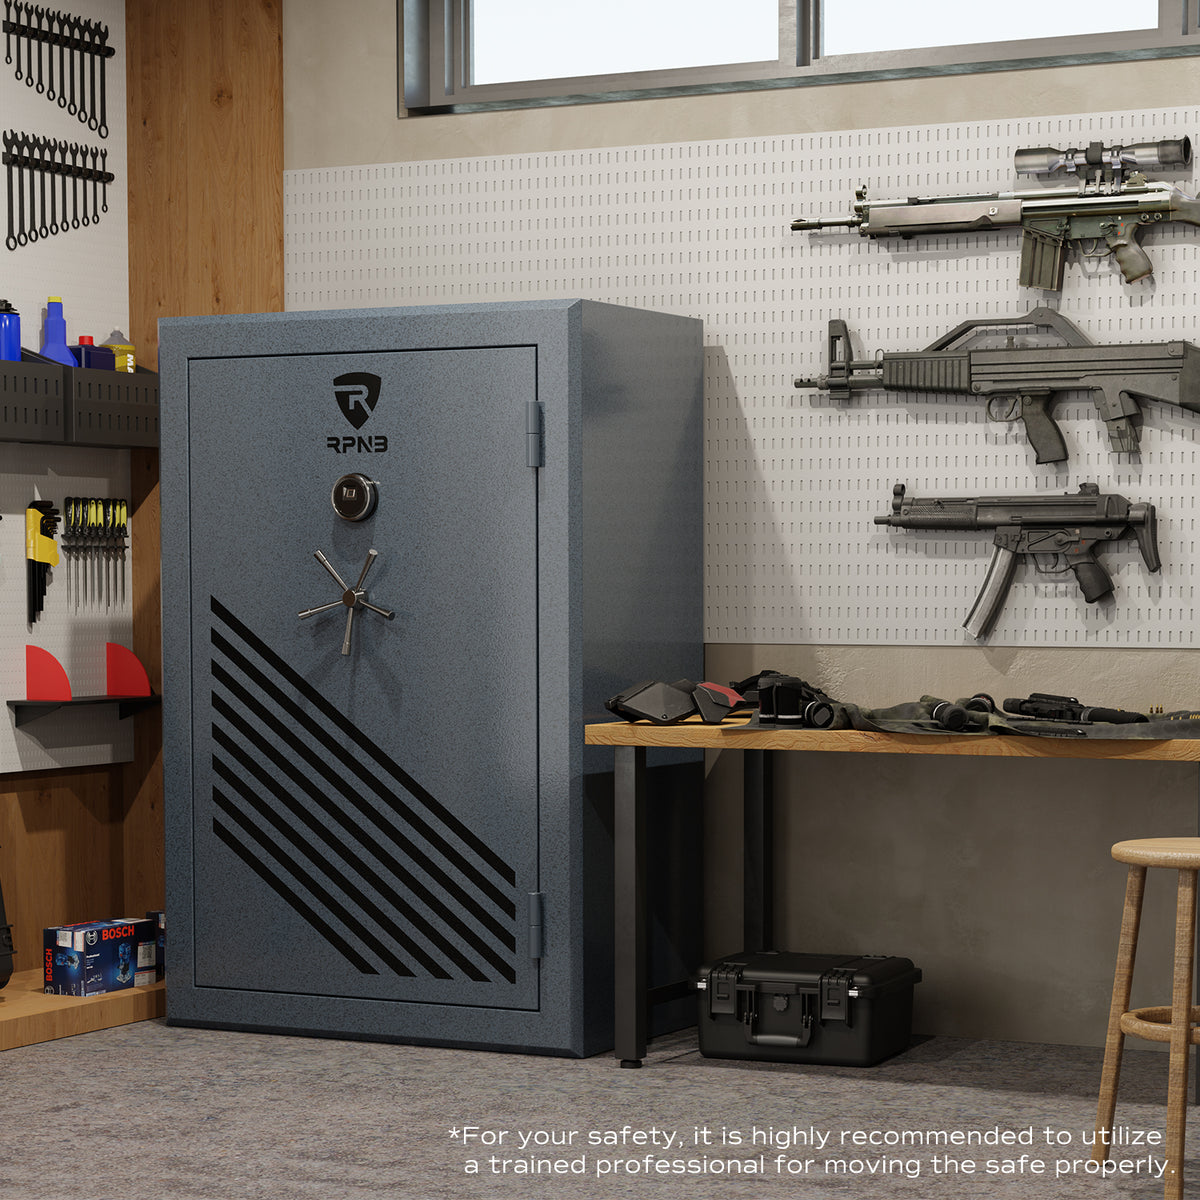 RPNB RPFS45-G 45 Gun Fireproof Biometric Gun Safe Grey Installed in Garage 2